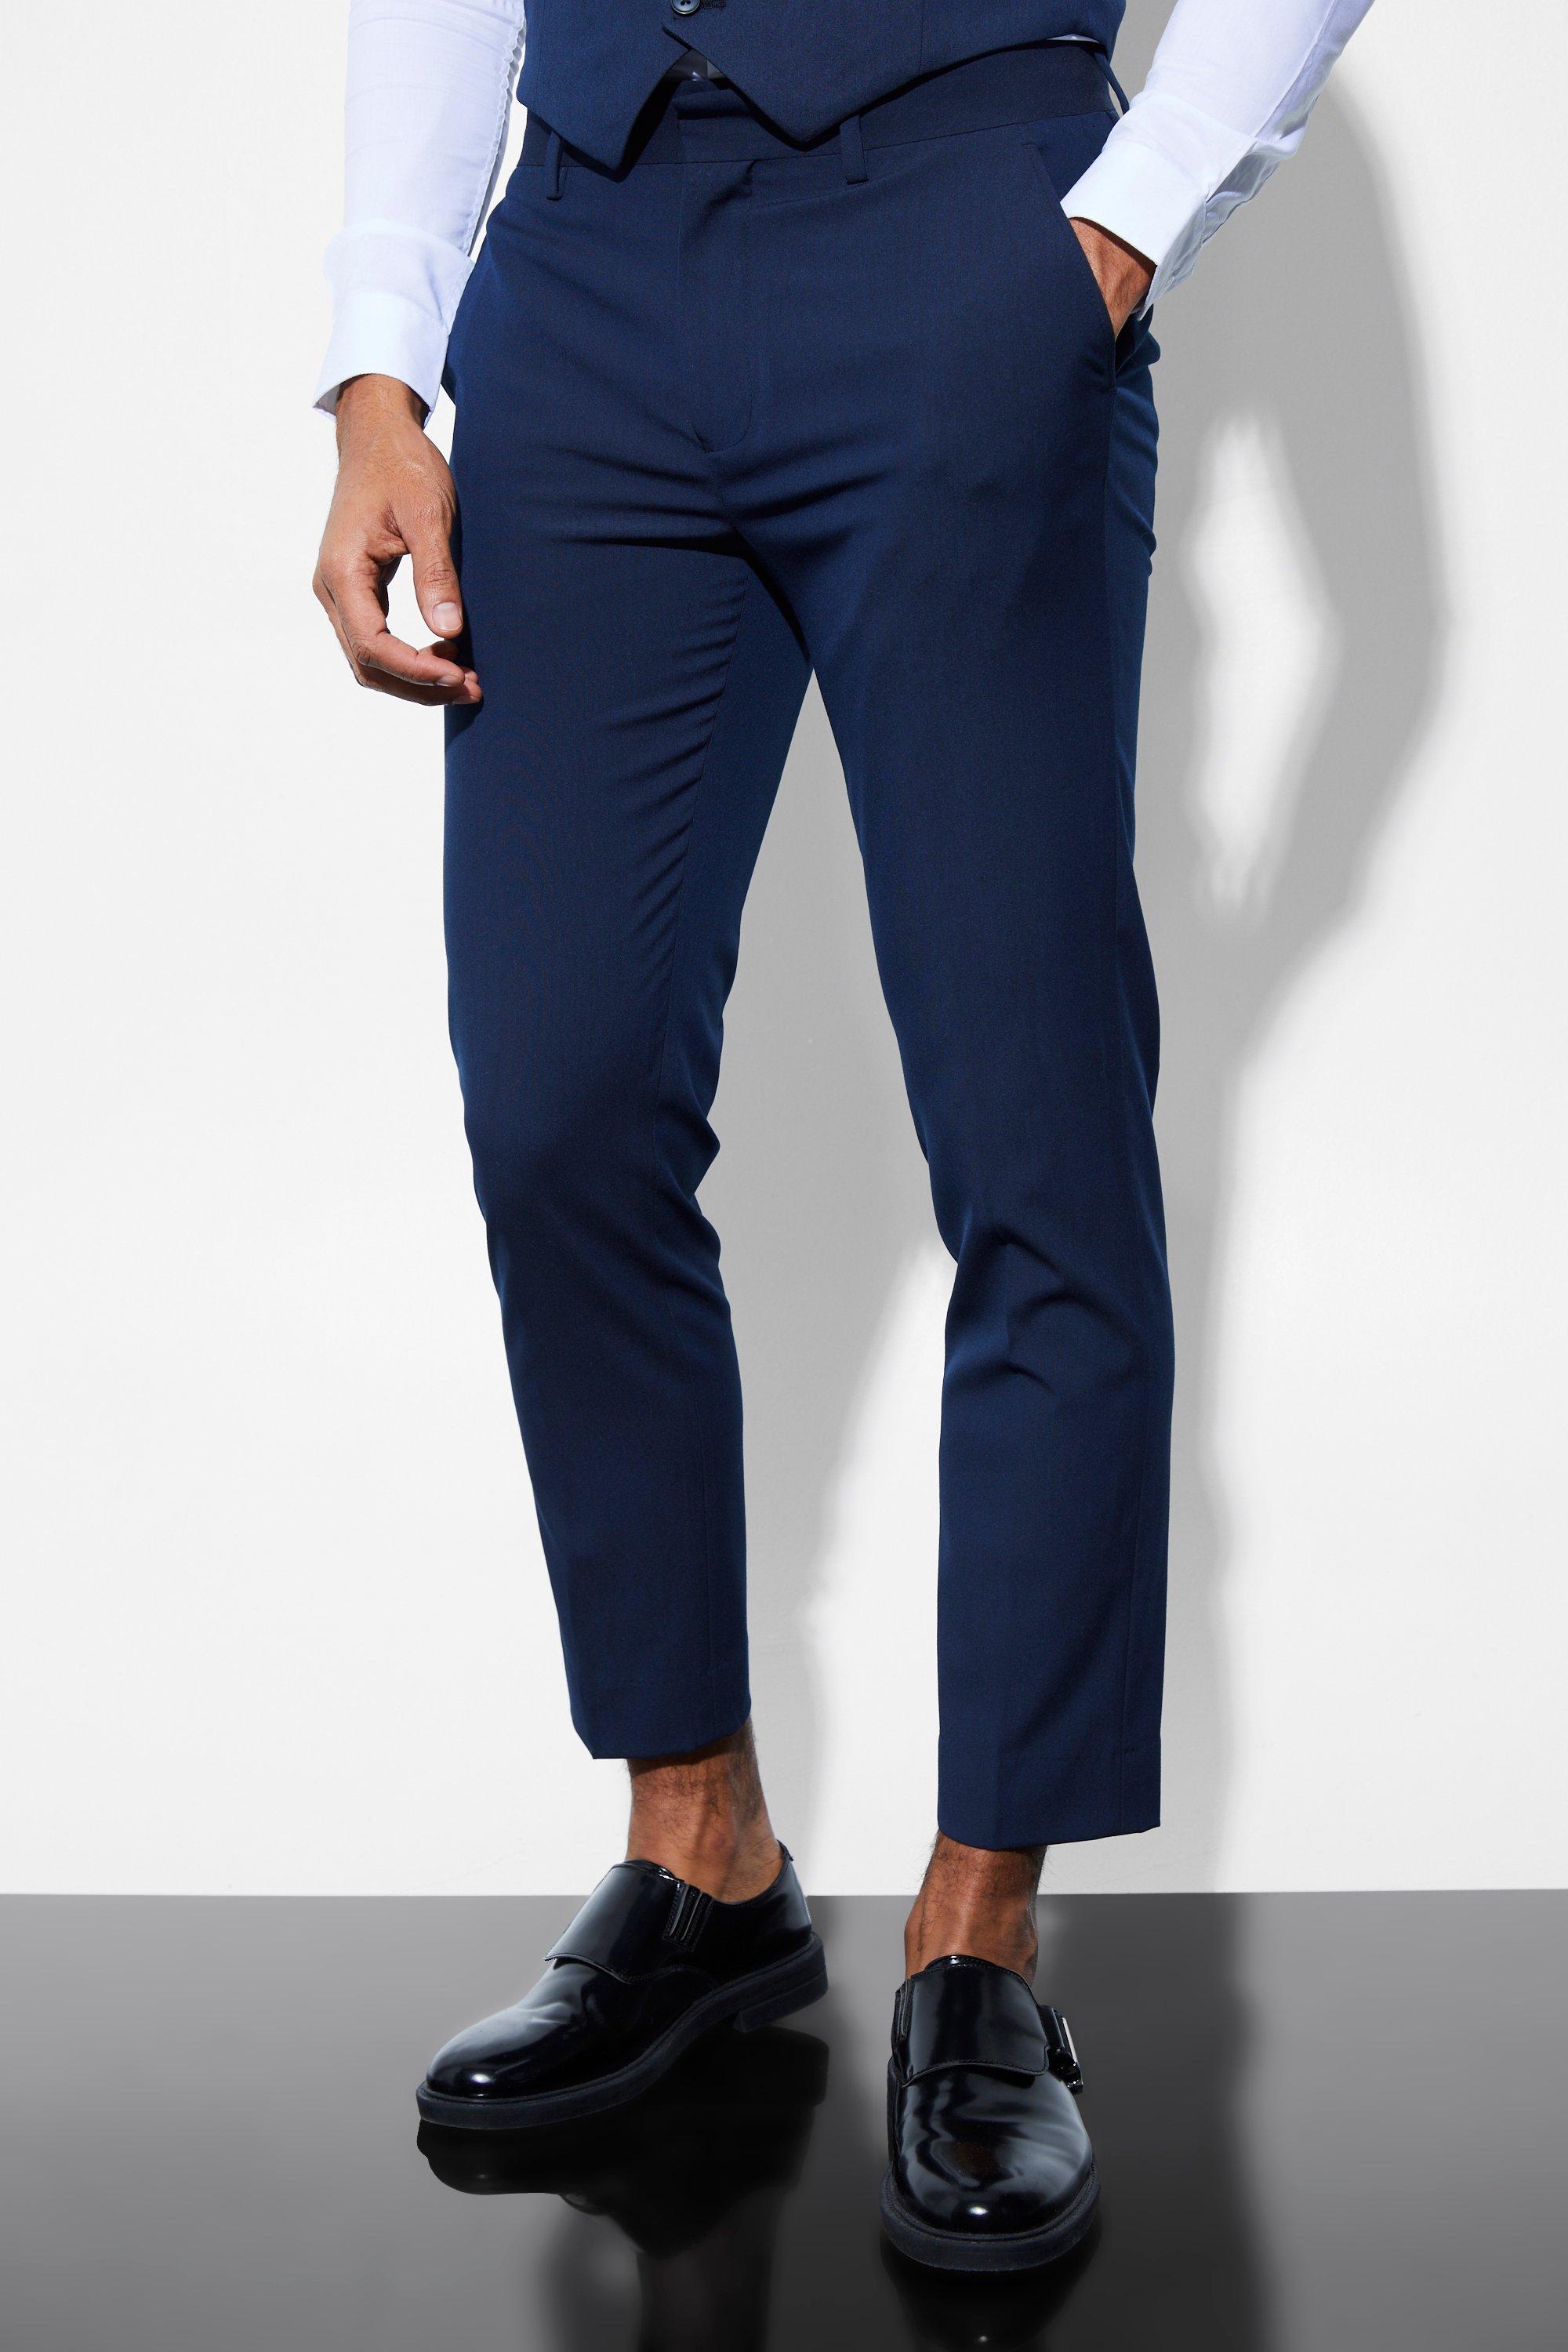 pantalon de costume skinny court homme - bleu - 30l, bleu